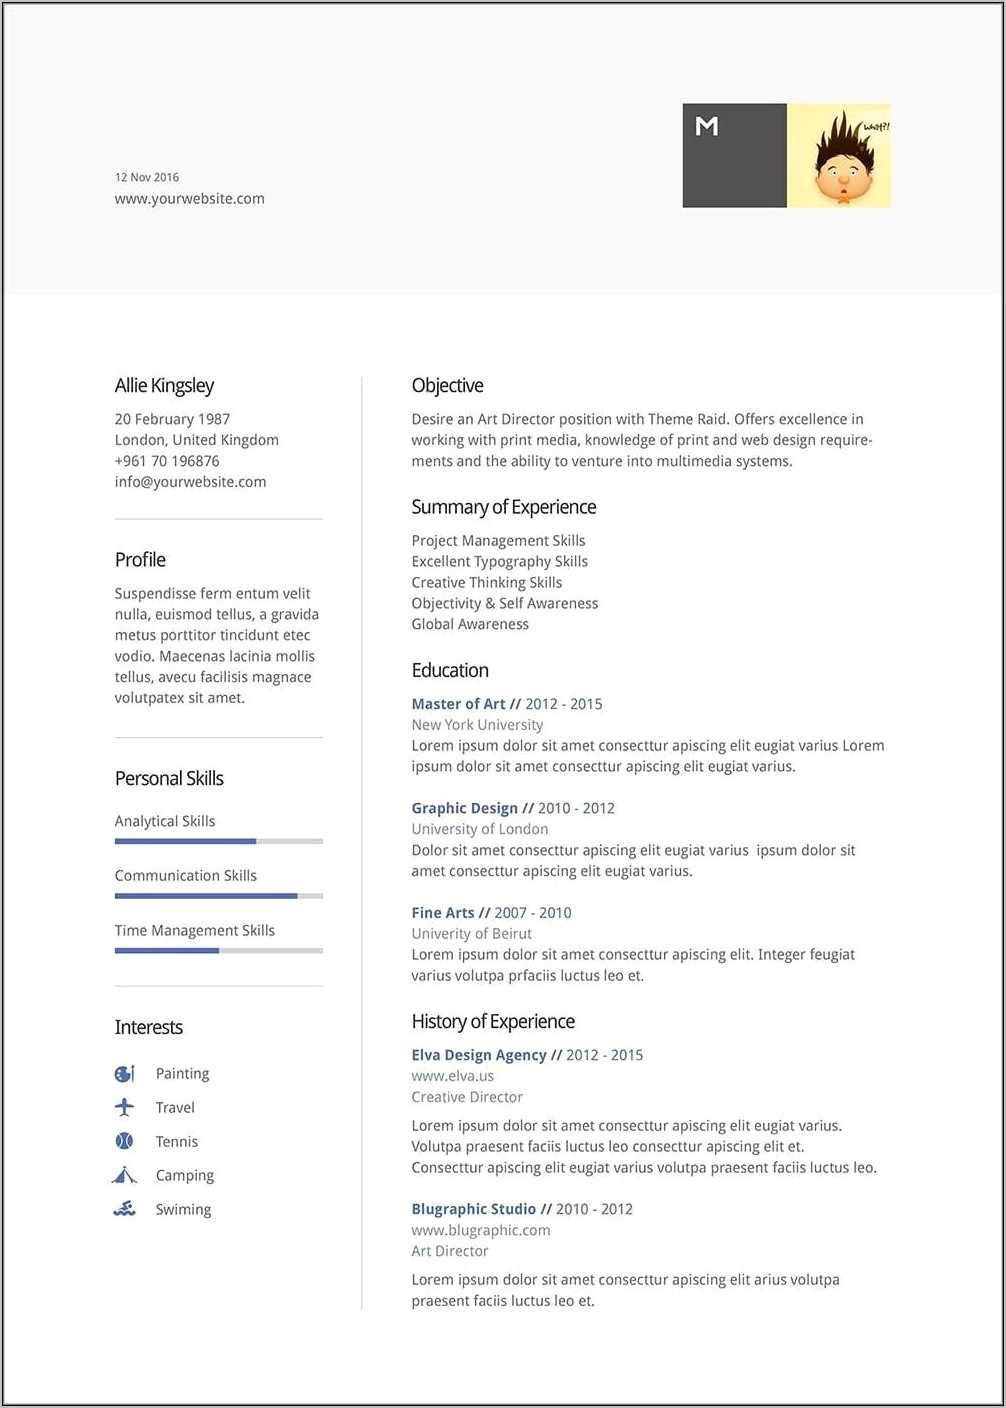 Resume Format Download Ms Word 2010